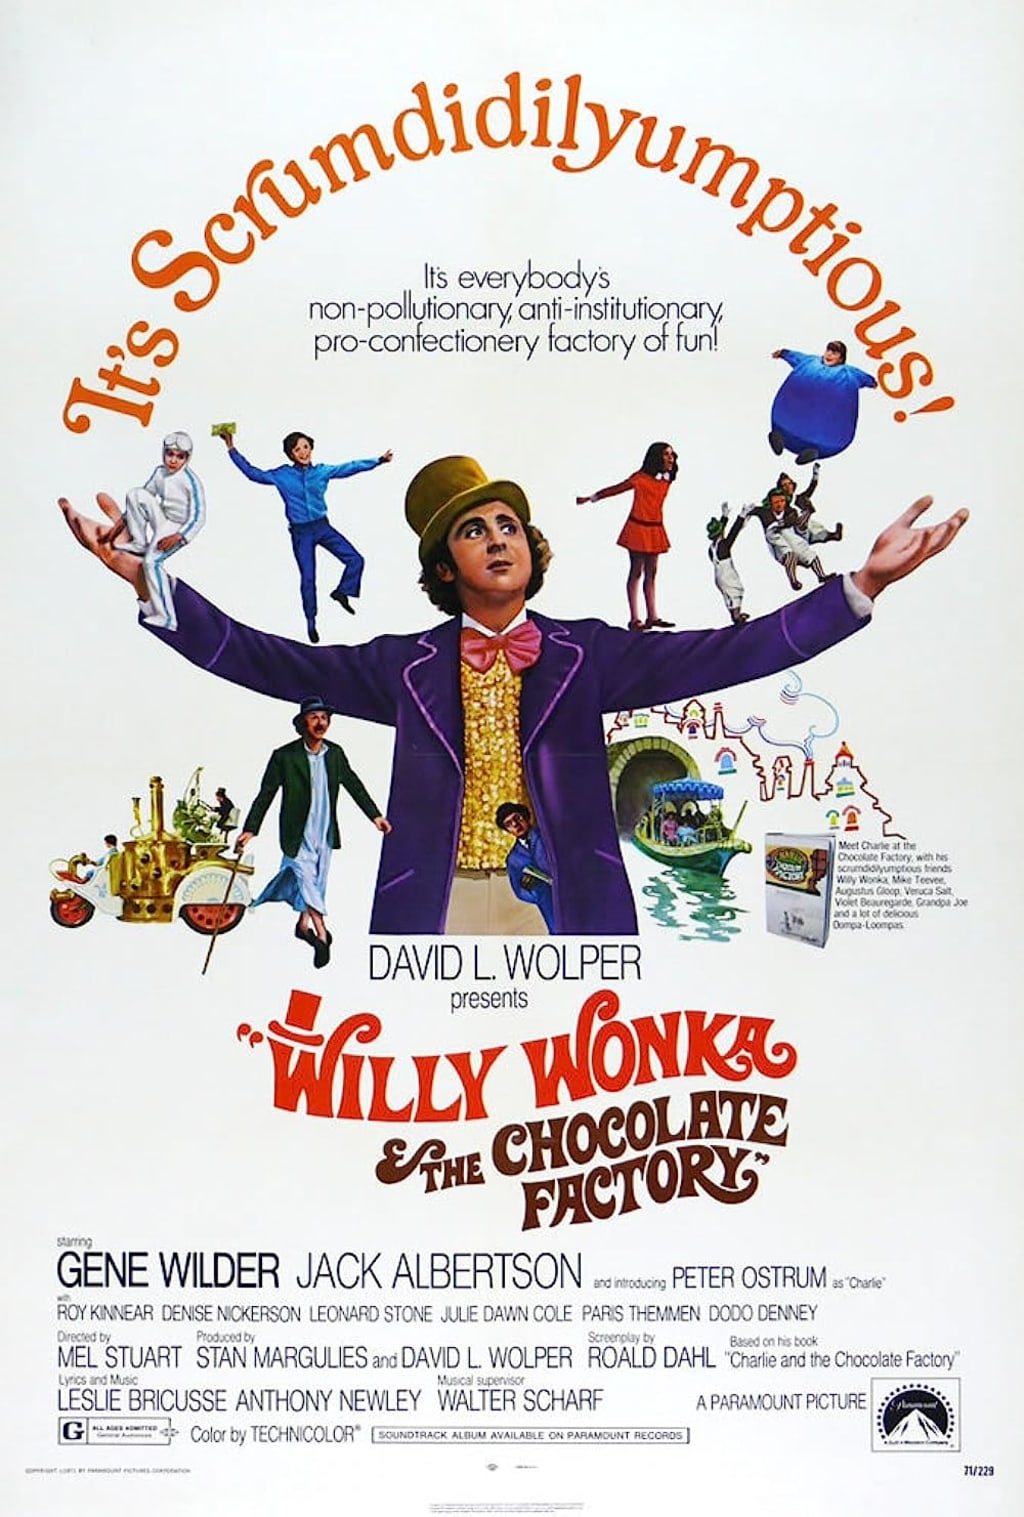 Hey good looking - Willy Wonka Sarcasm Meme